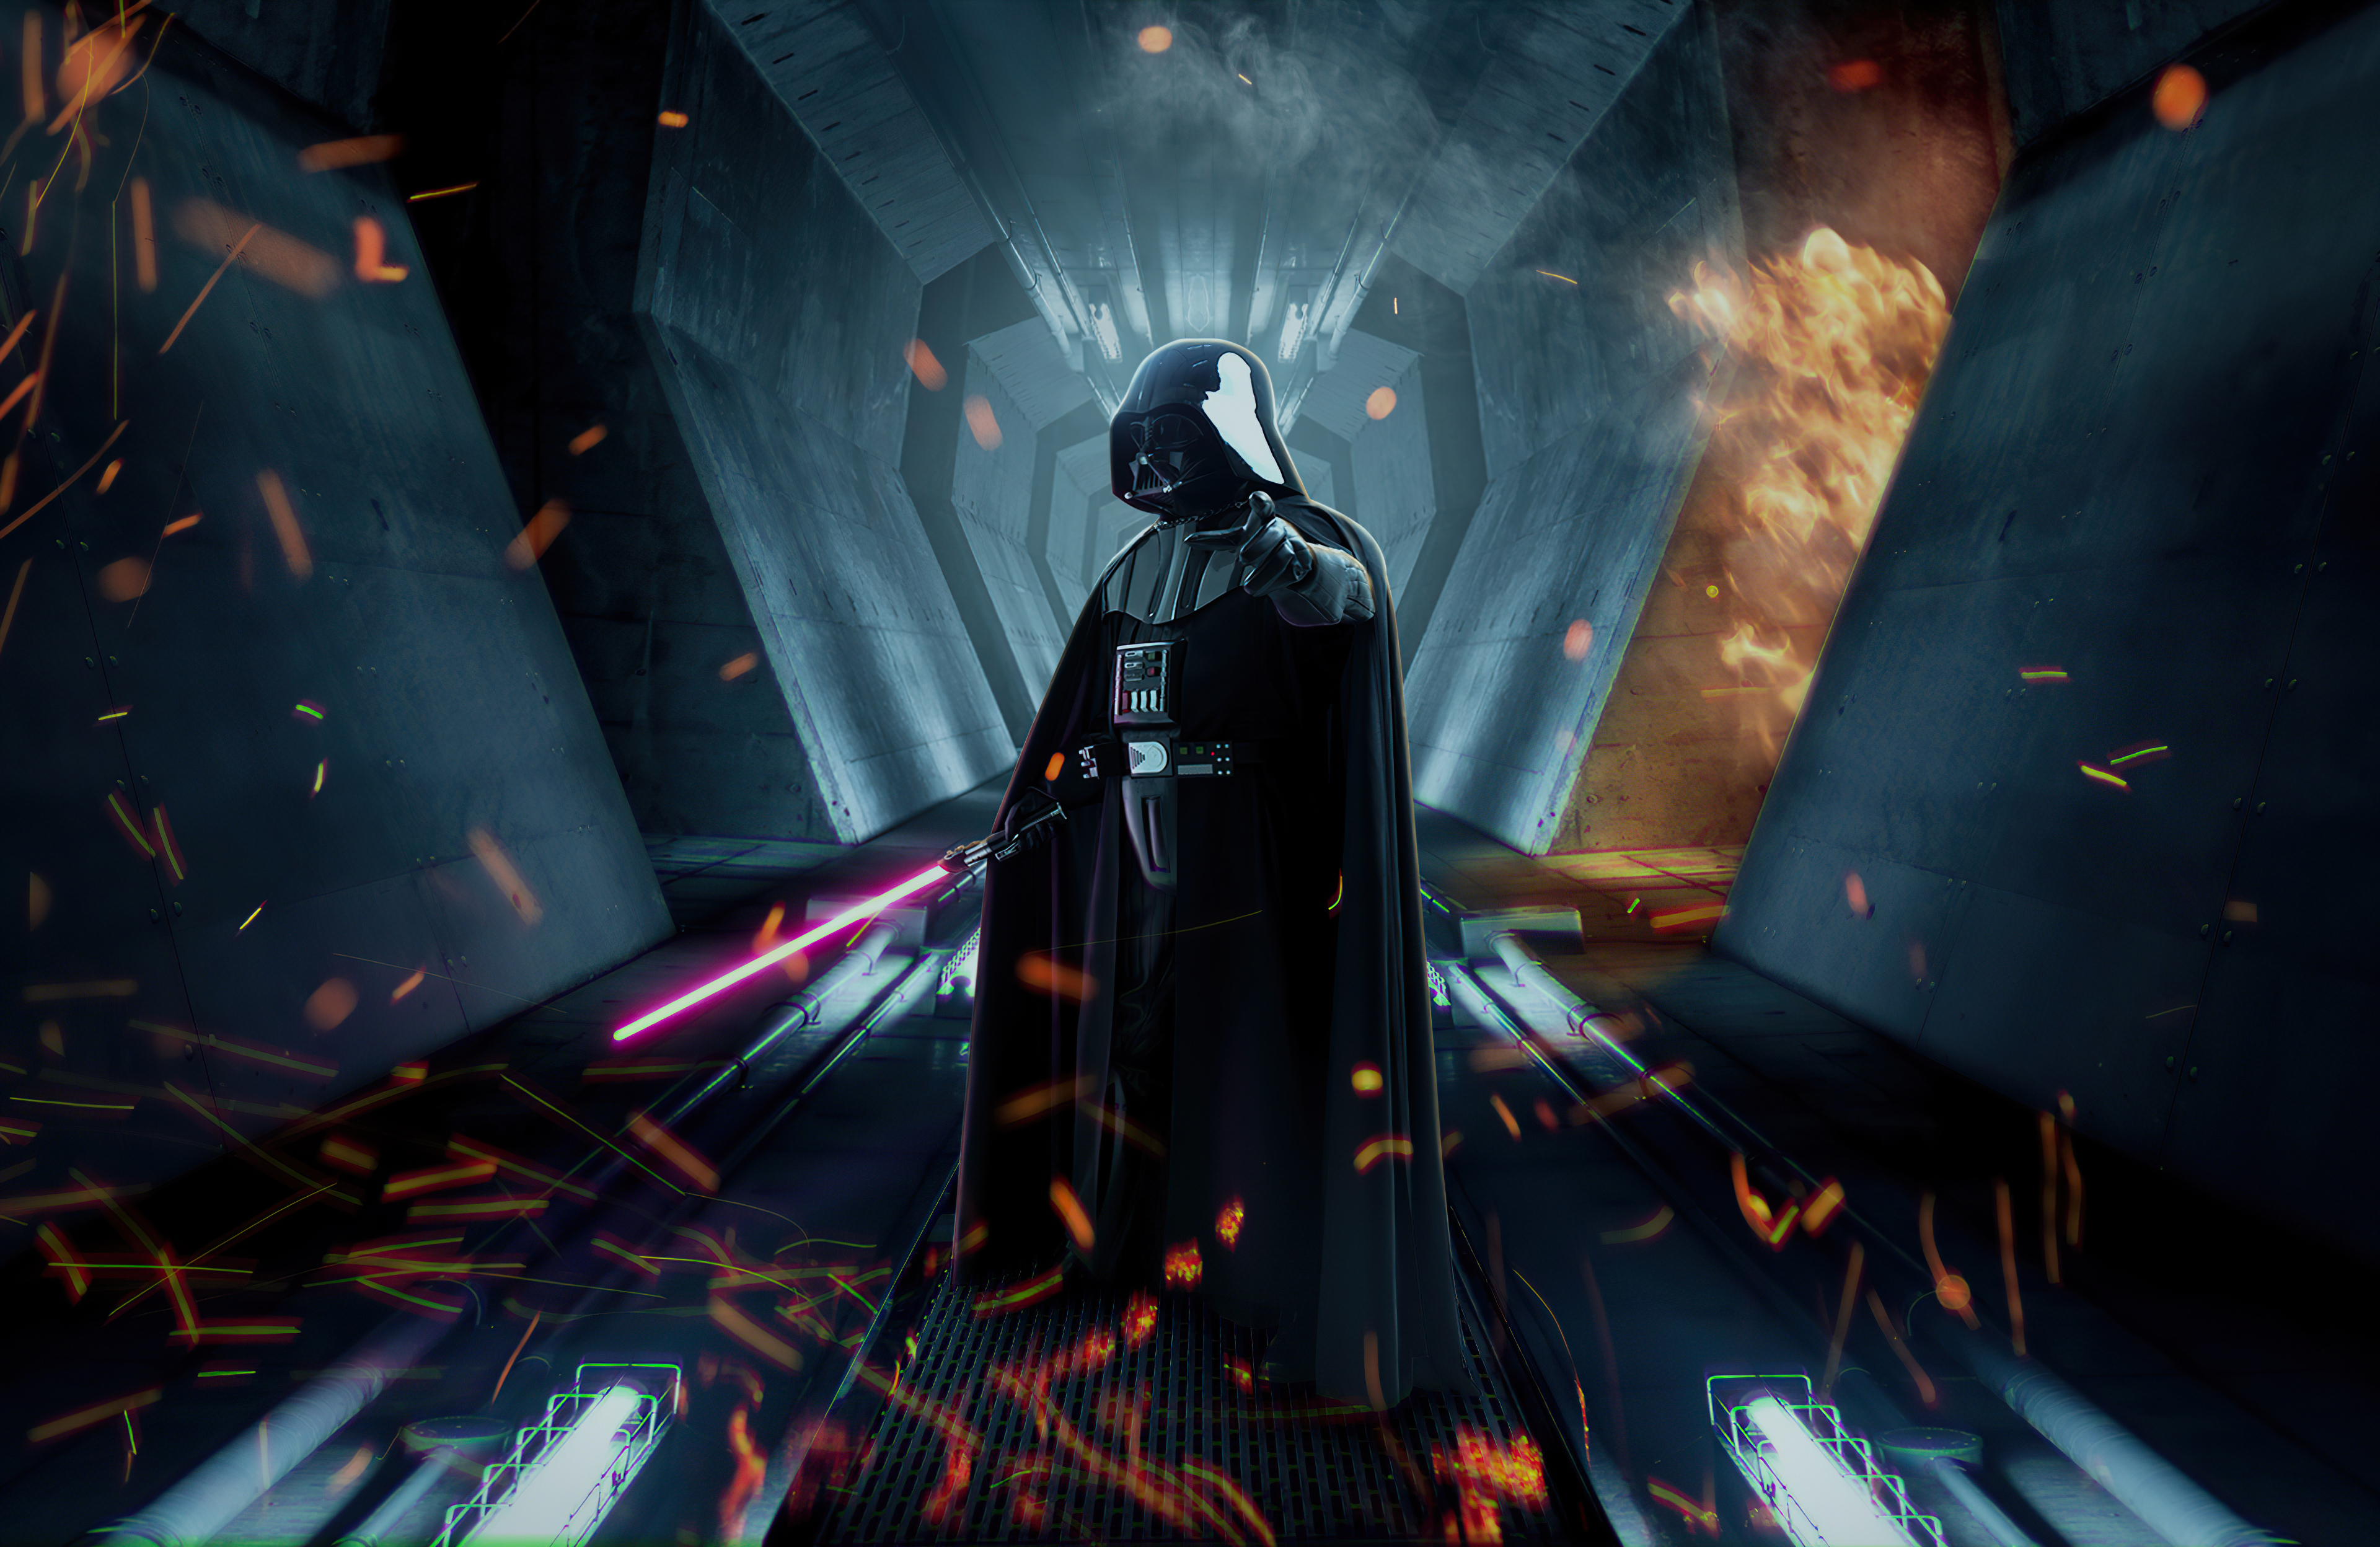 Wallpaper Darth Vader from Star Wars Fanmade